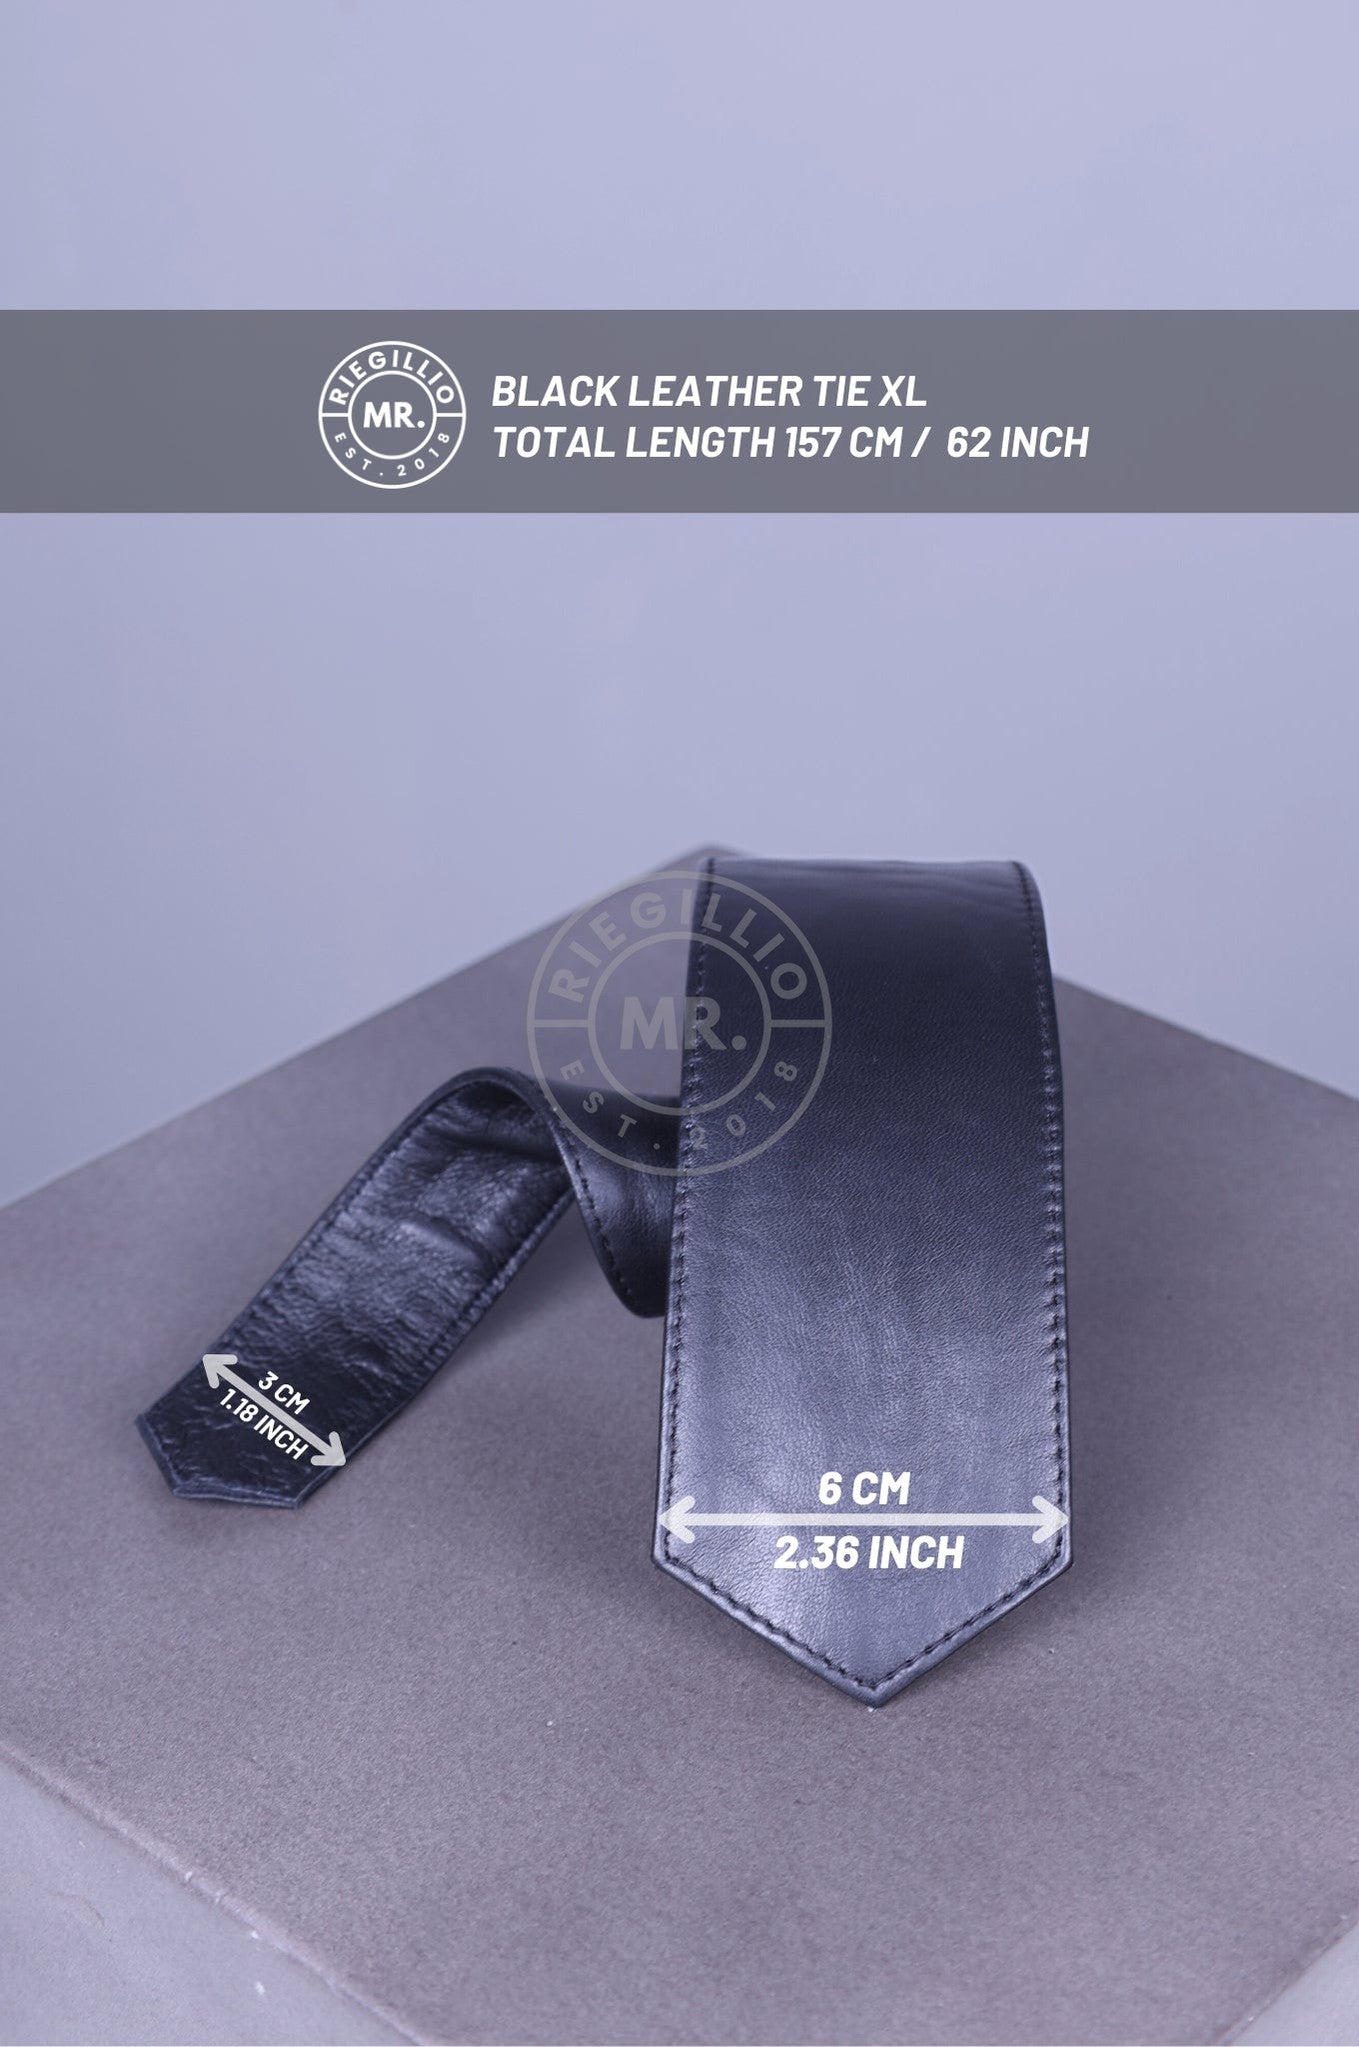 Black Leather Tie XL at MR. Riegillio